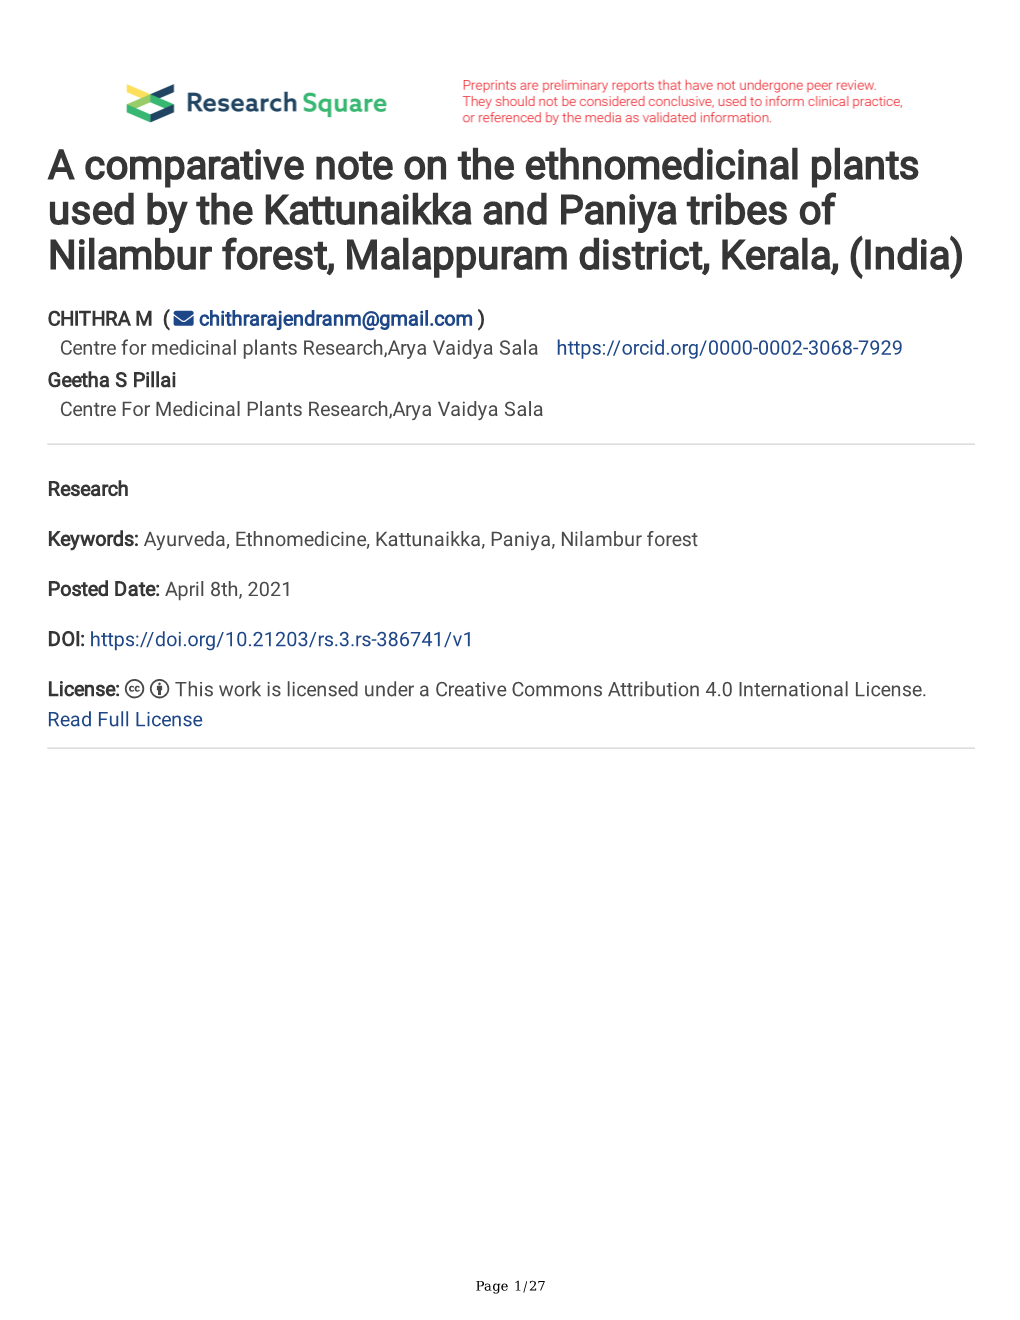 A Comparative Note on the Ethnomedicinal Plants Used by the Kattunaikka and Paniya Tribes of Nilambur Forest, Malappuram District, Kerala, (India)